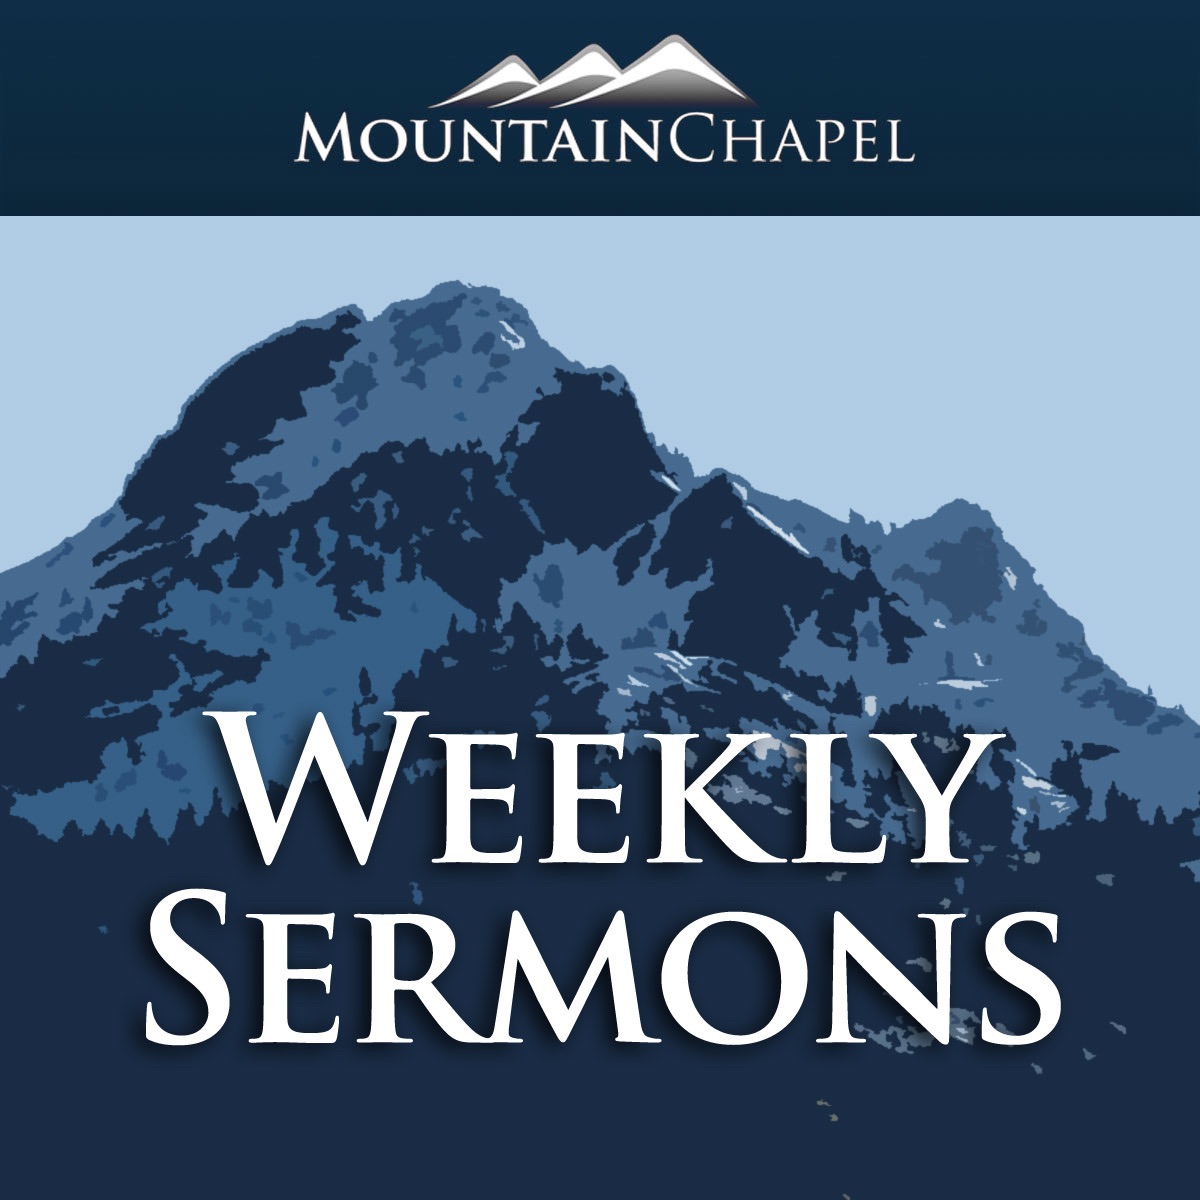 Mountain Chapel "Weekly Sermons"